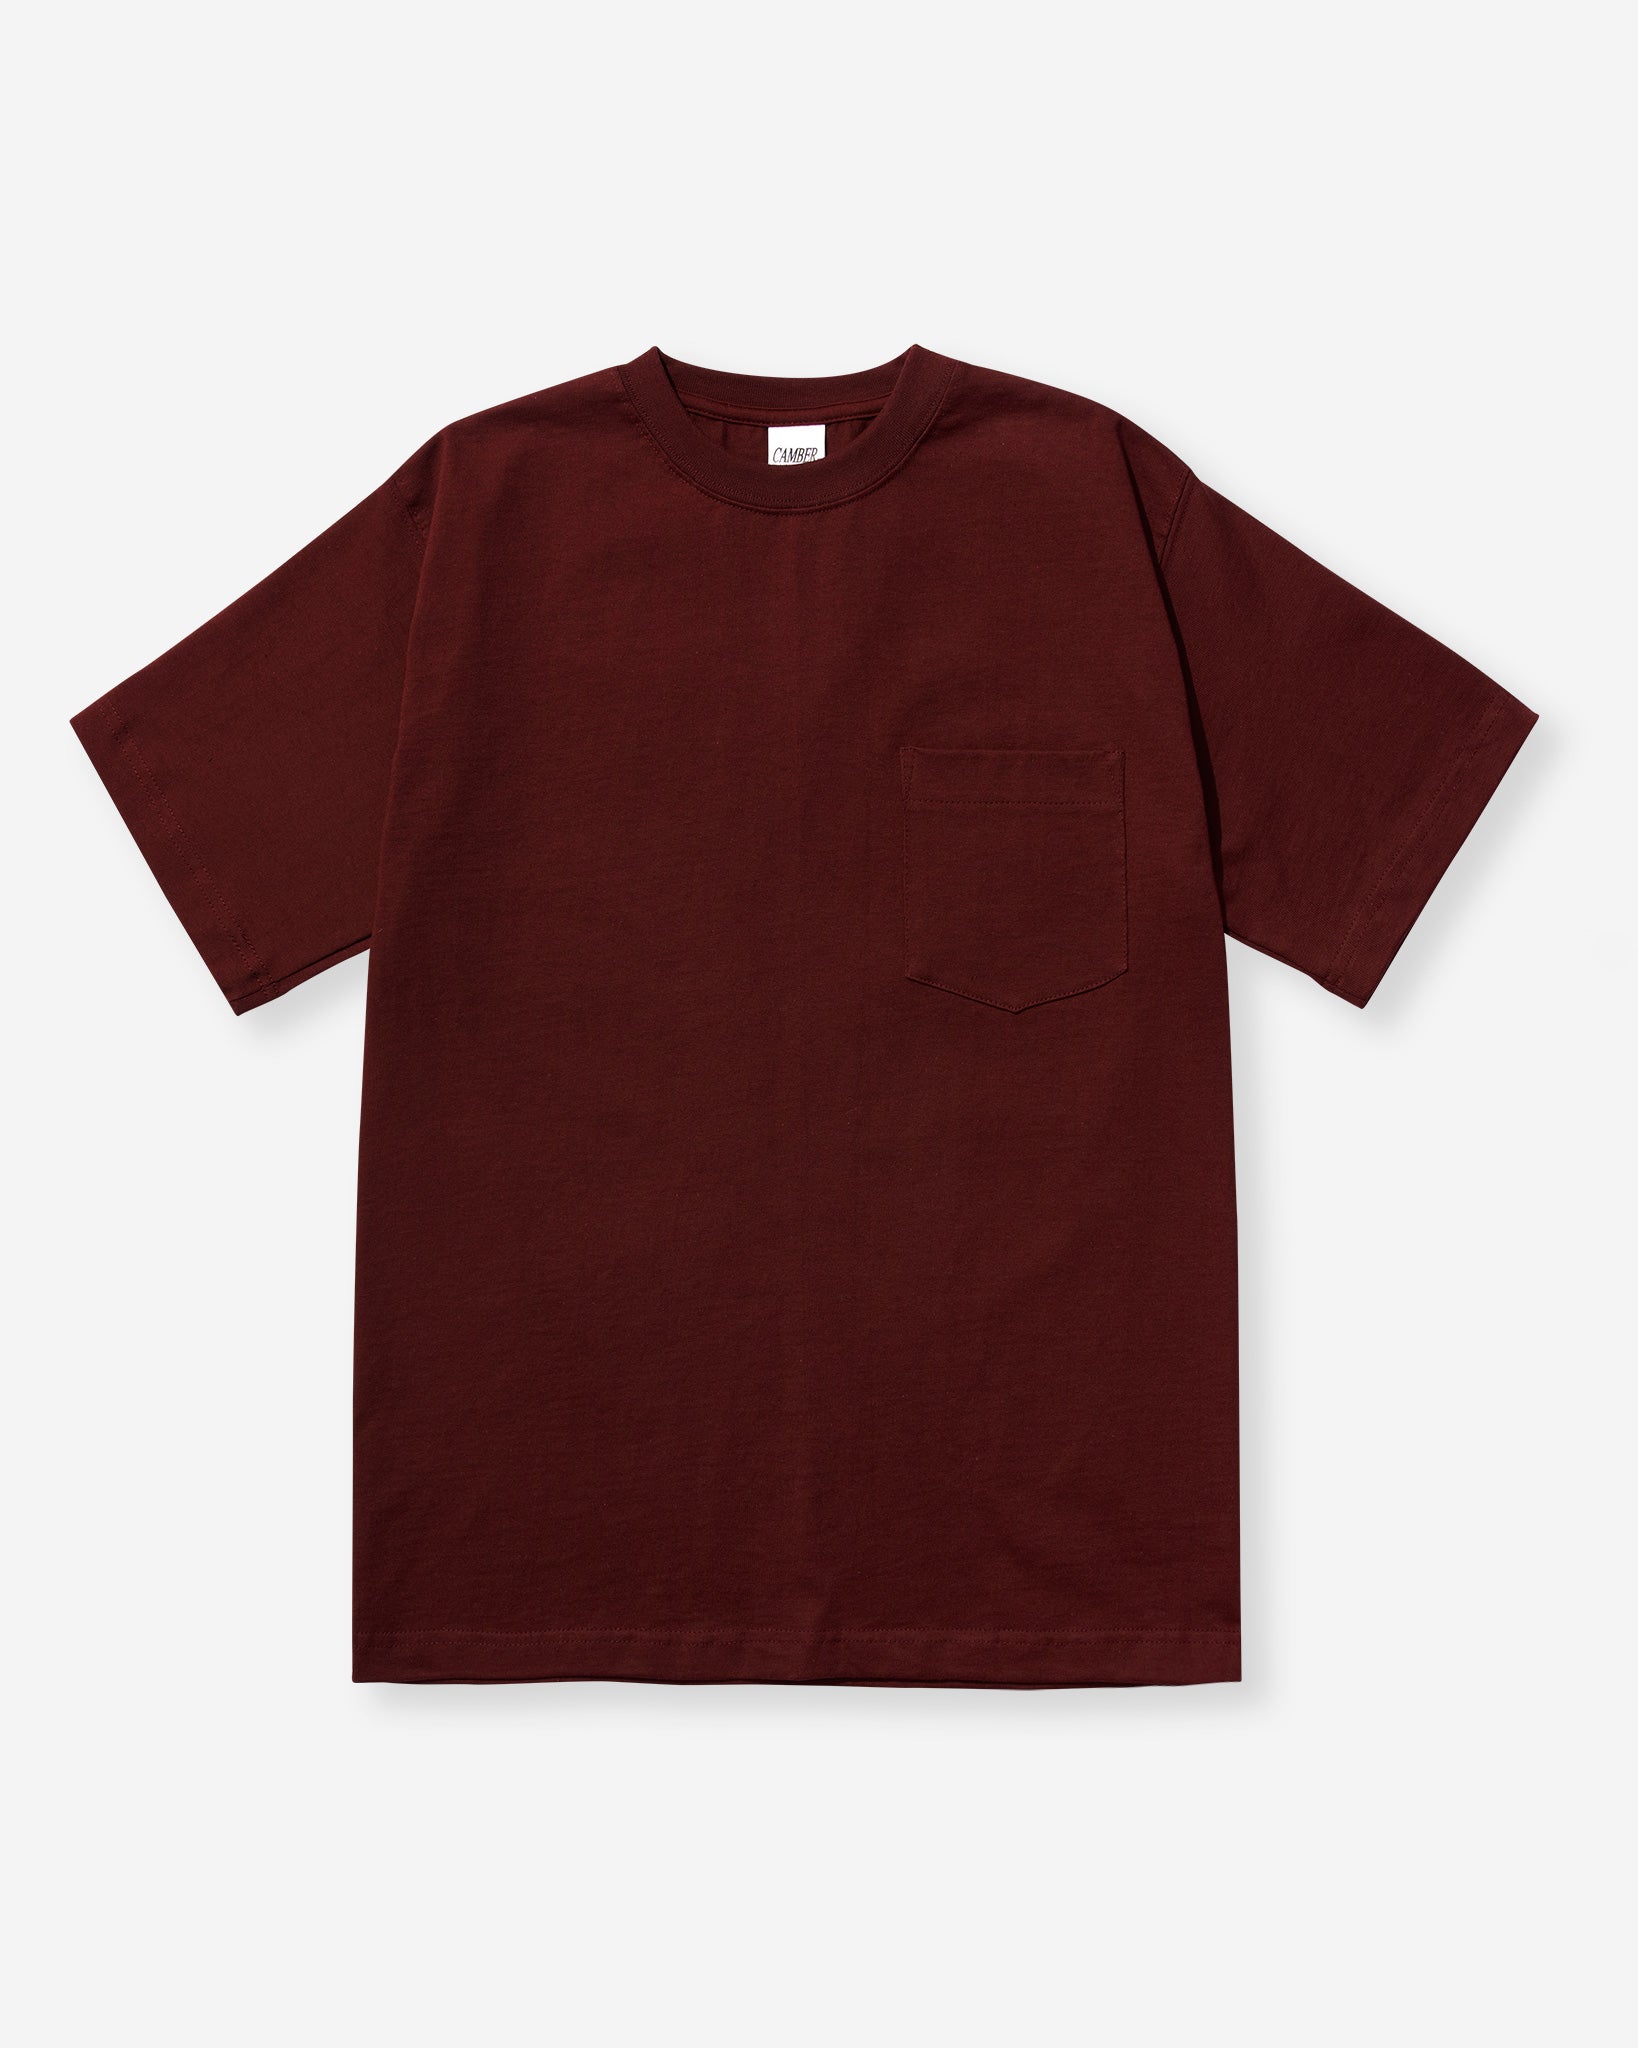 MAX-WEIGHT® Pocket T-Shirt - Burgundy